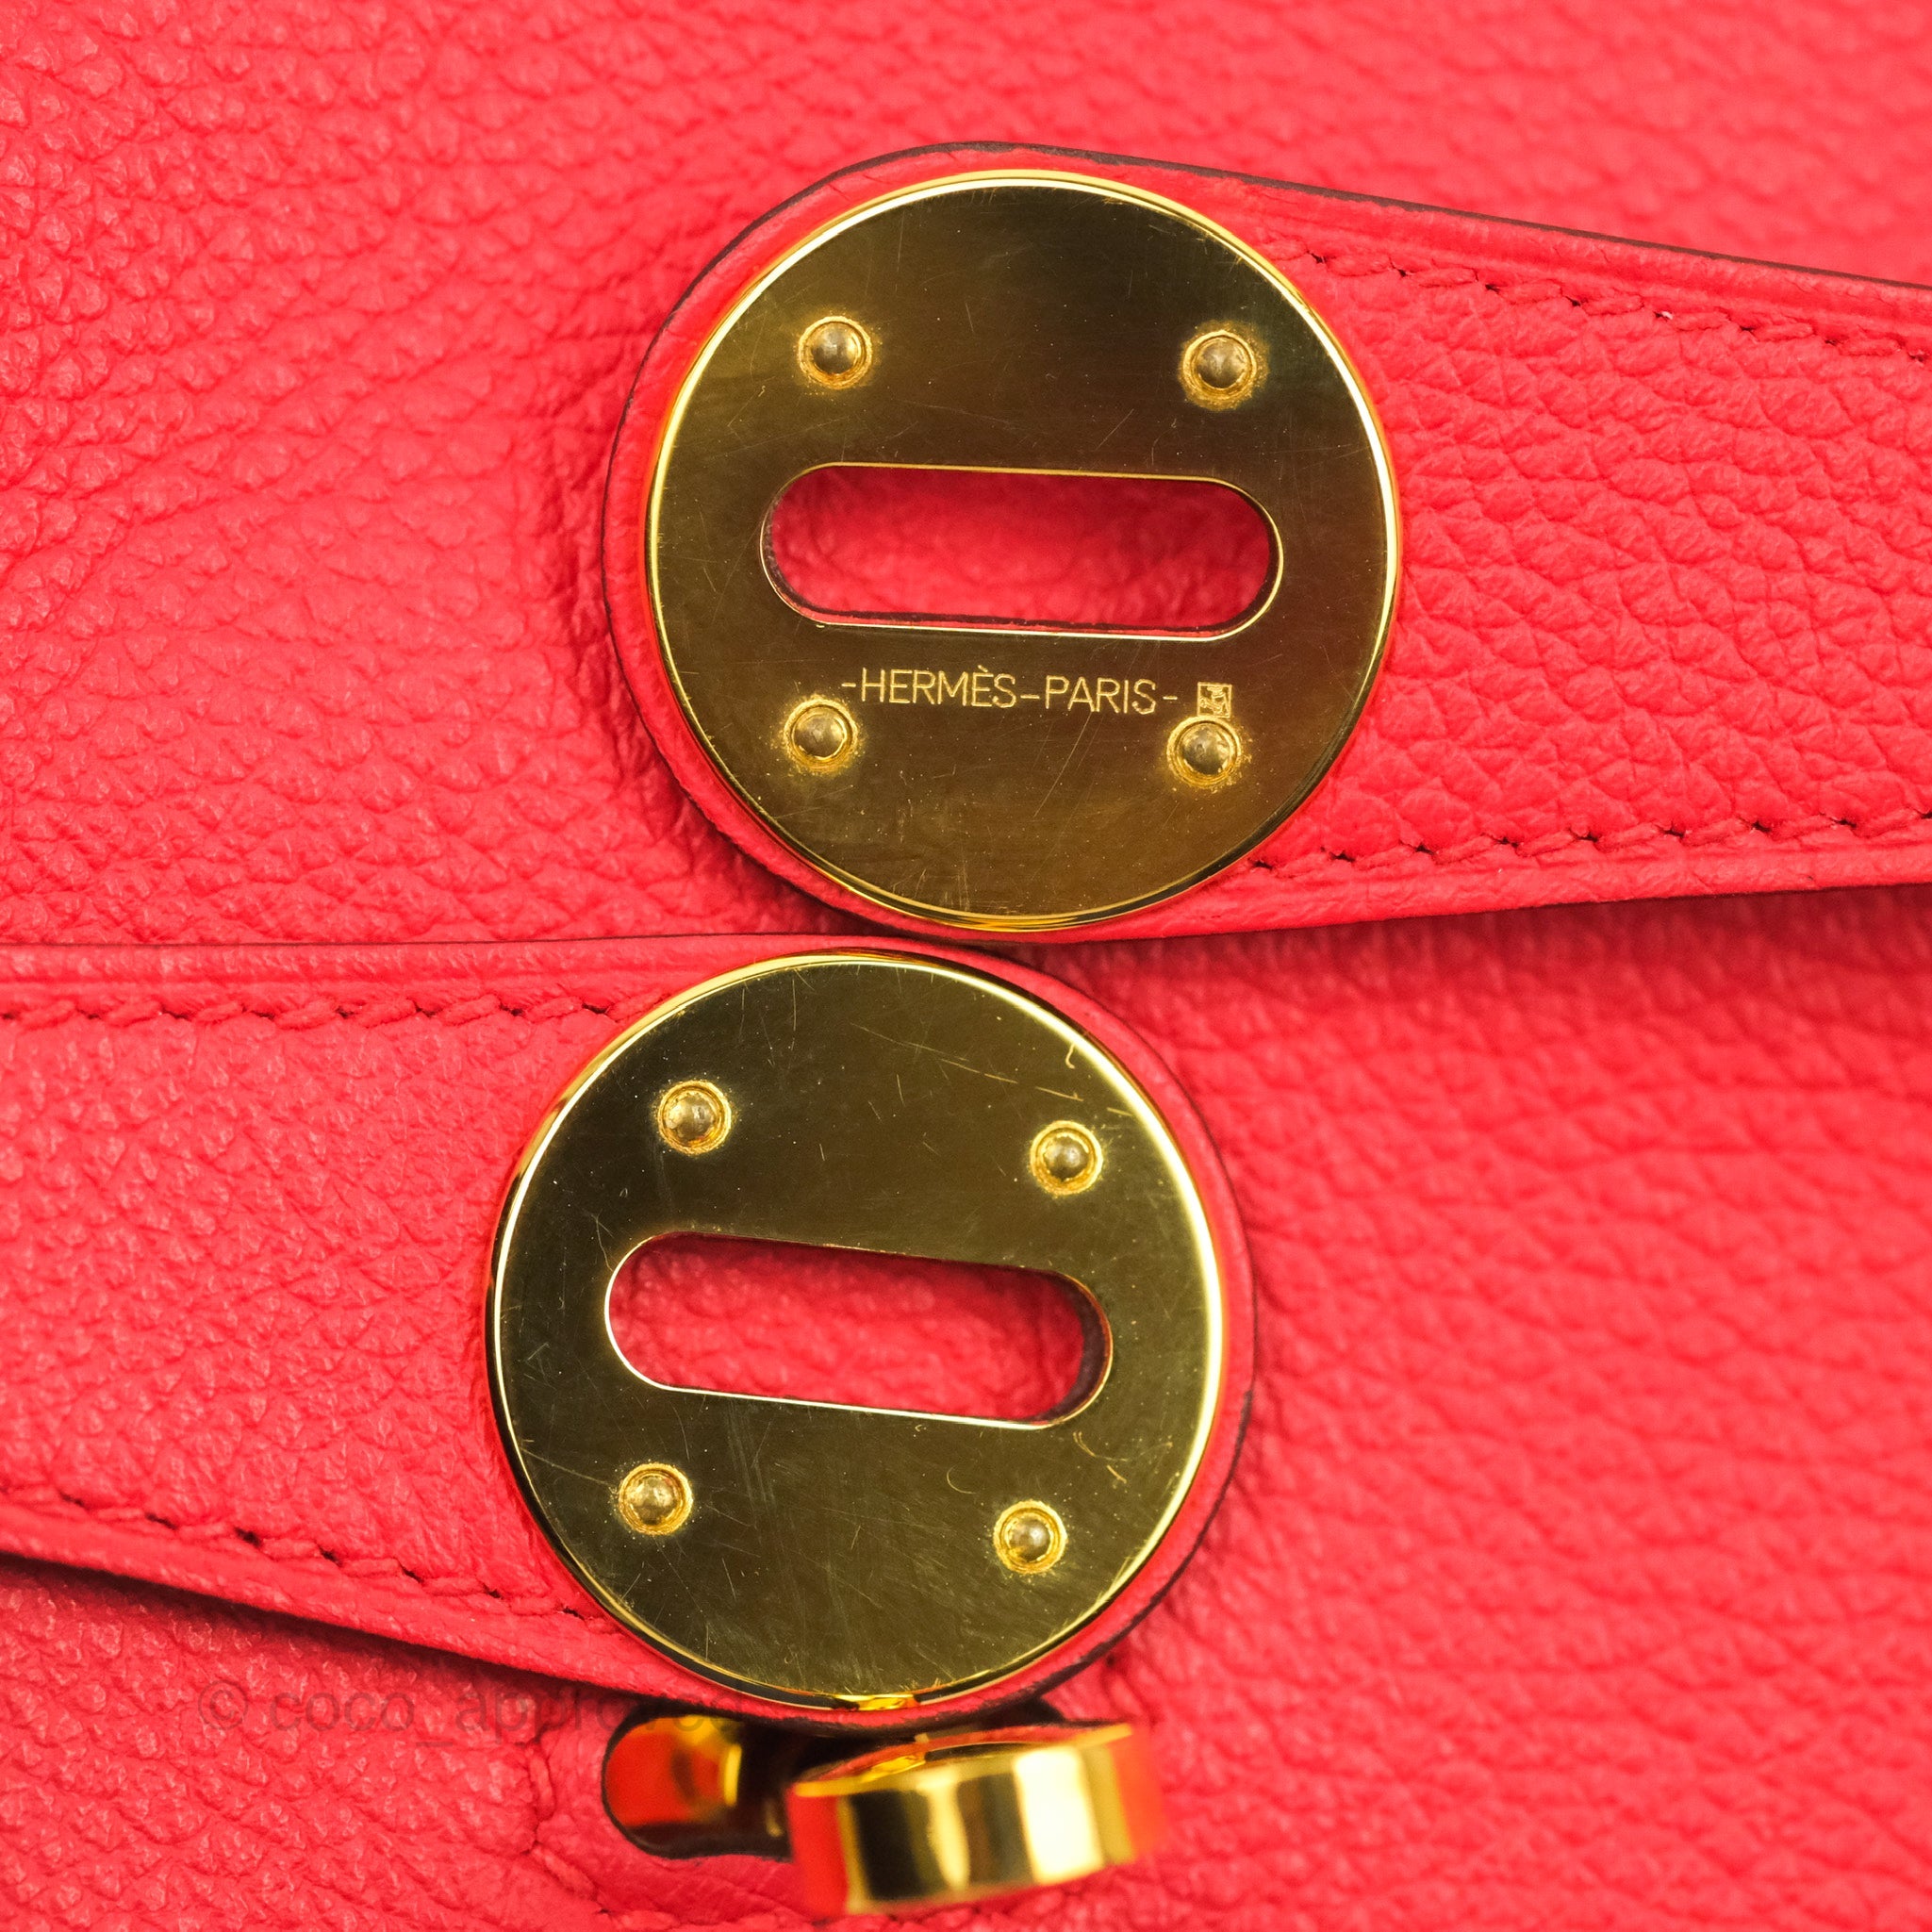 Hermès Lindy 26 Evercolour Rouge de Coeur Gold Hardware – Coco Approved  Studio